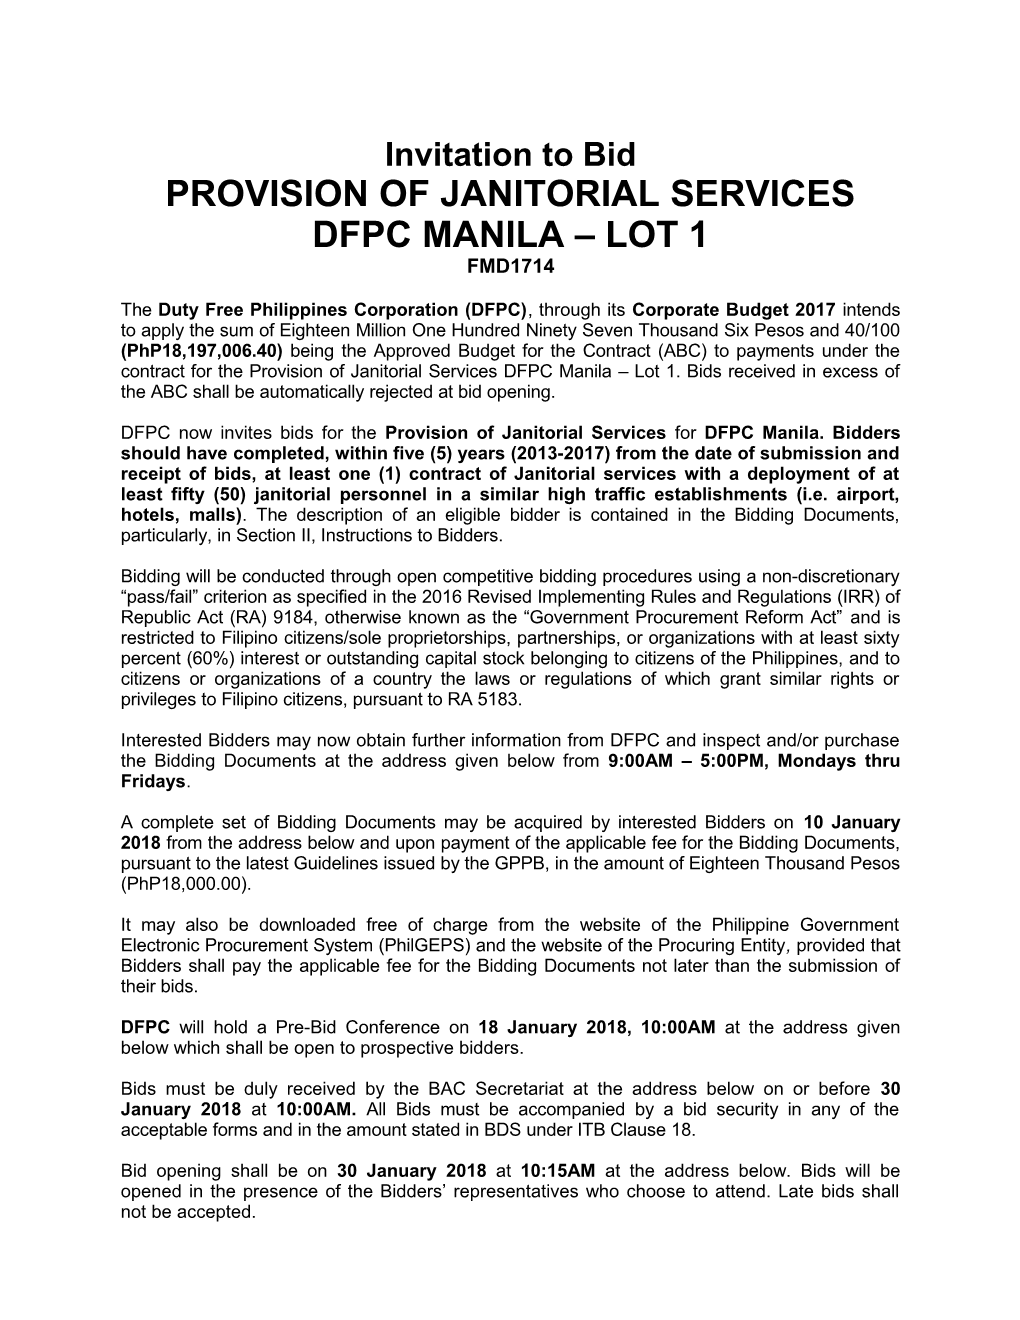 Provision of Janitorial Services Dfpc Manila Lot 1